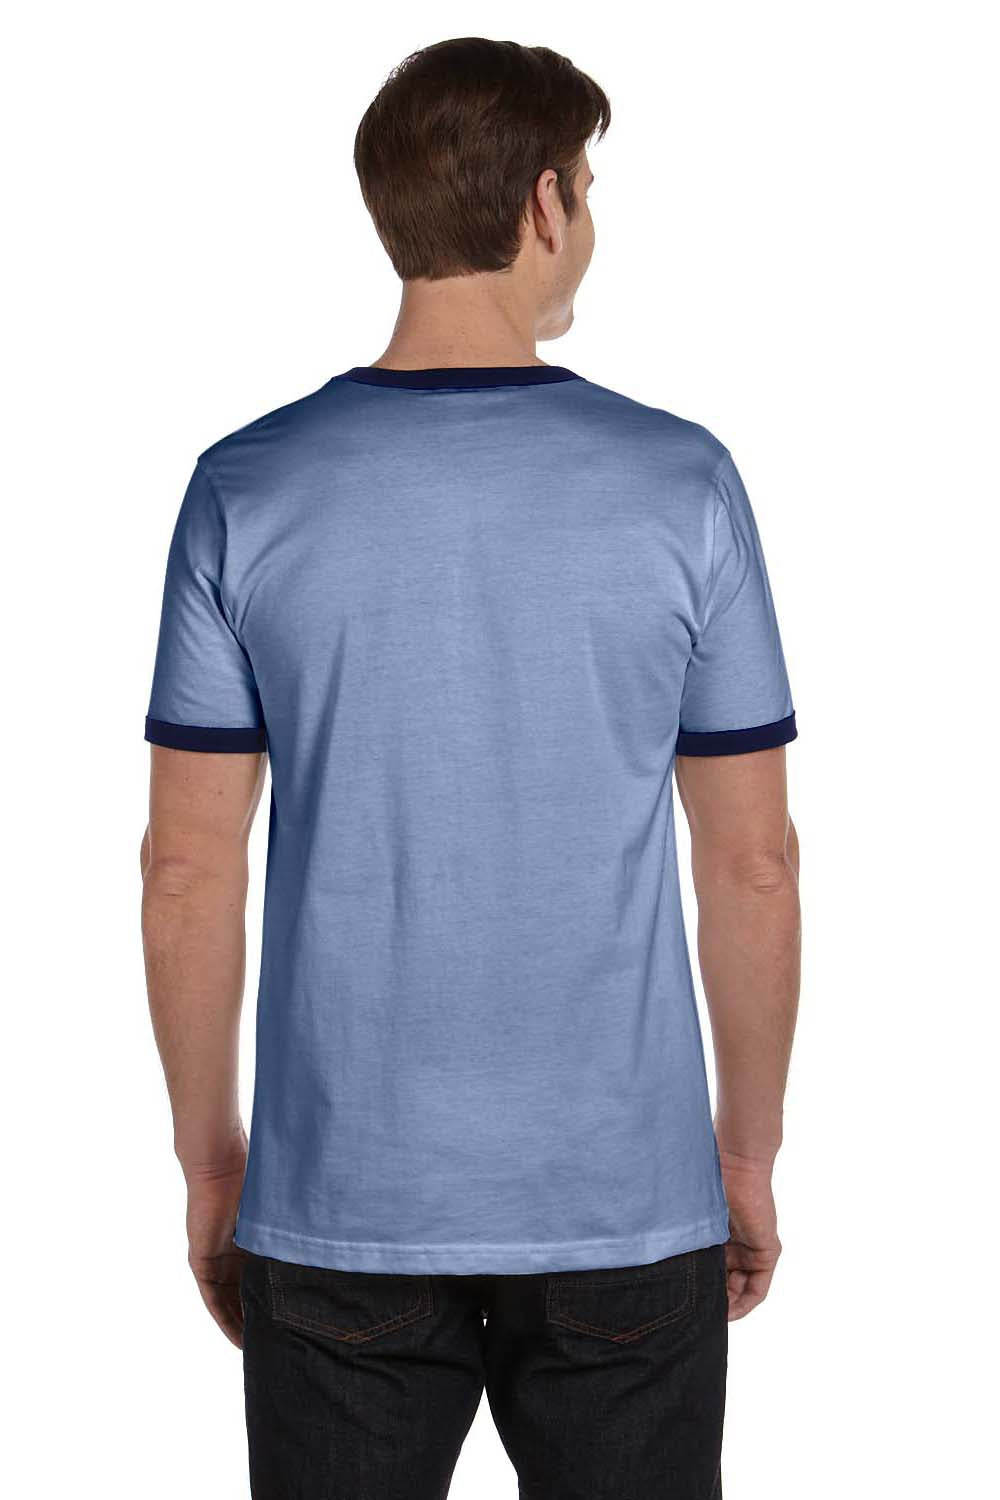 Bella + Canvas 3055C Mens Jersey Ringer Short Sleeve Crewneck T-Shirt Heather Blue/Navy Blue Back